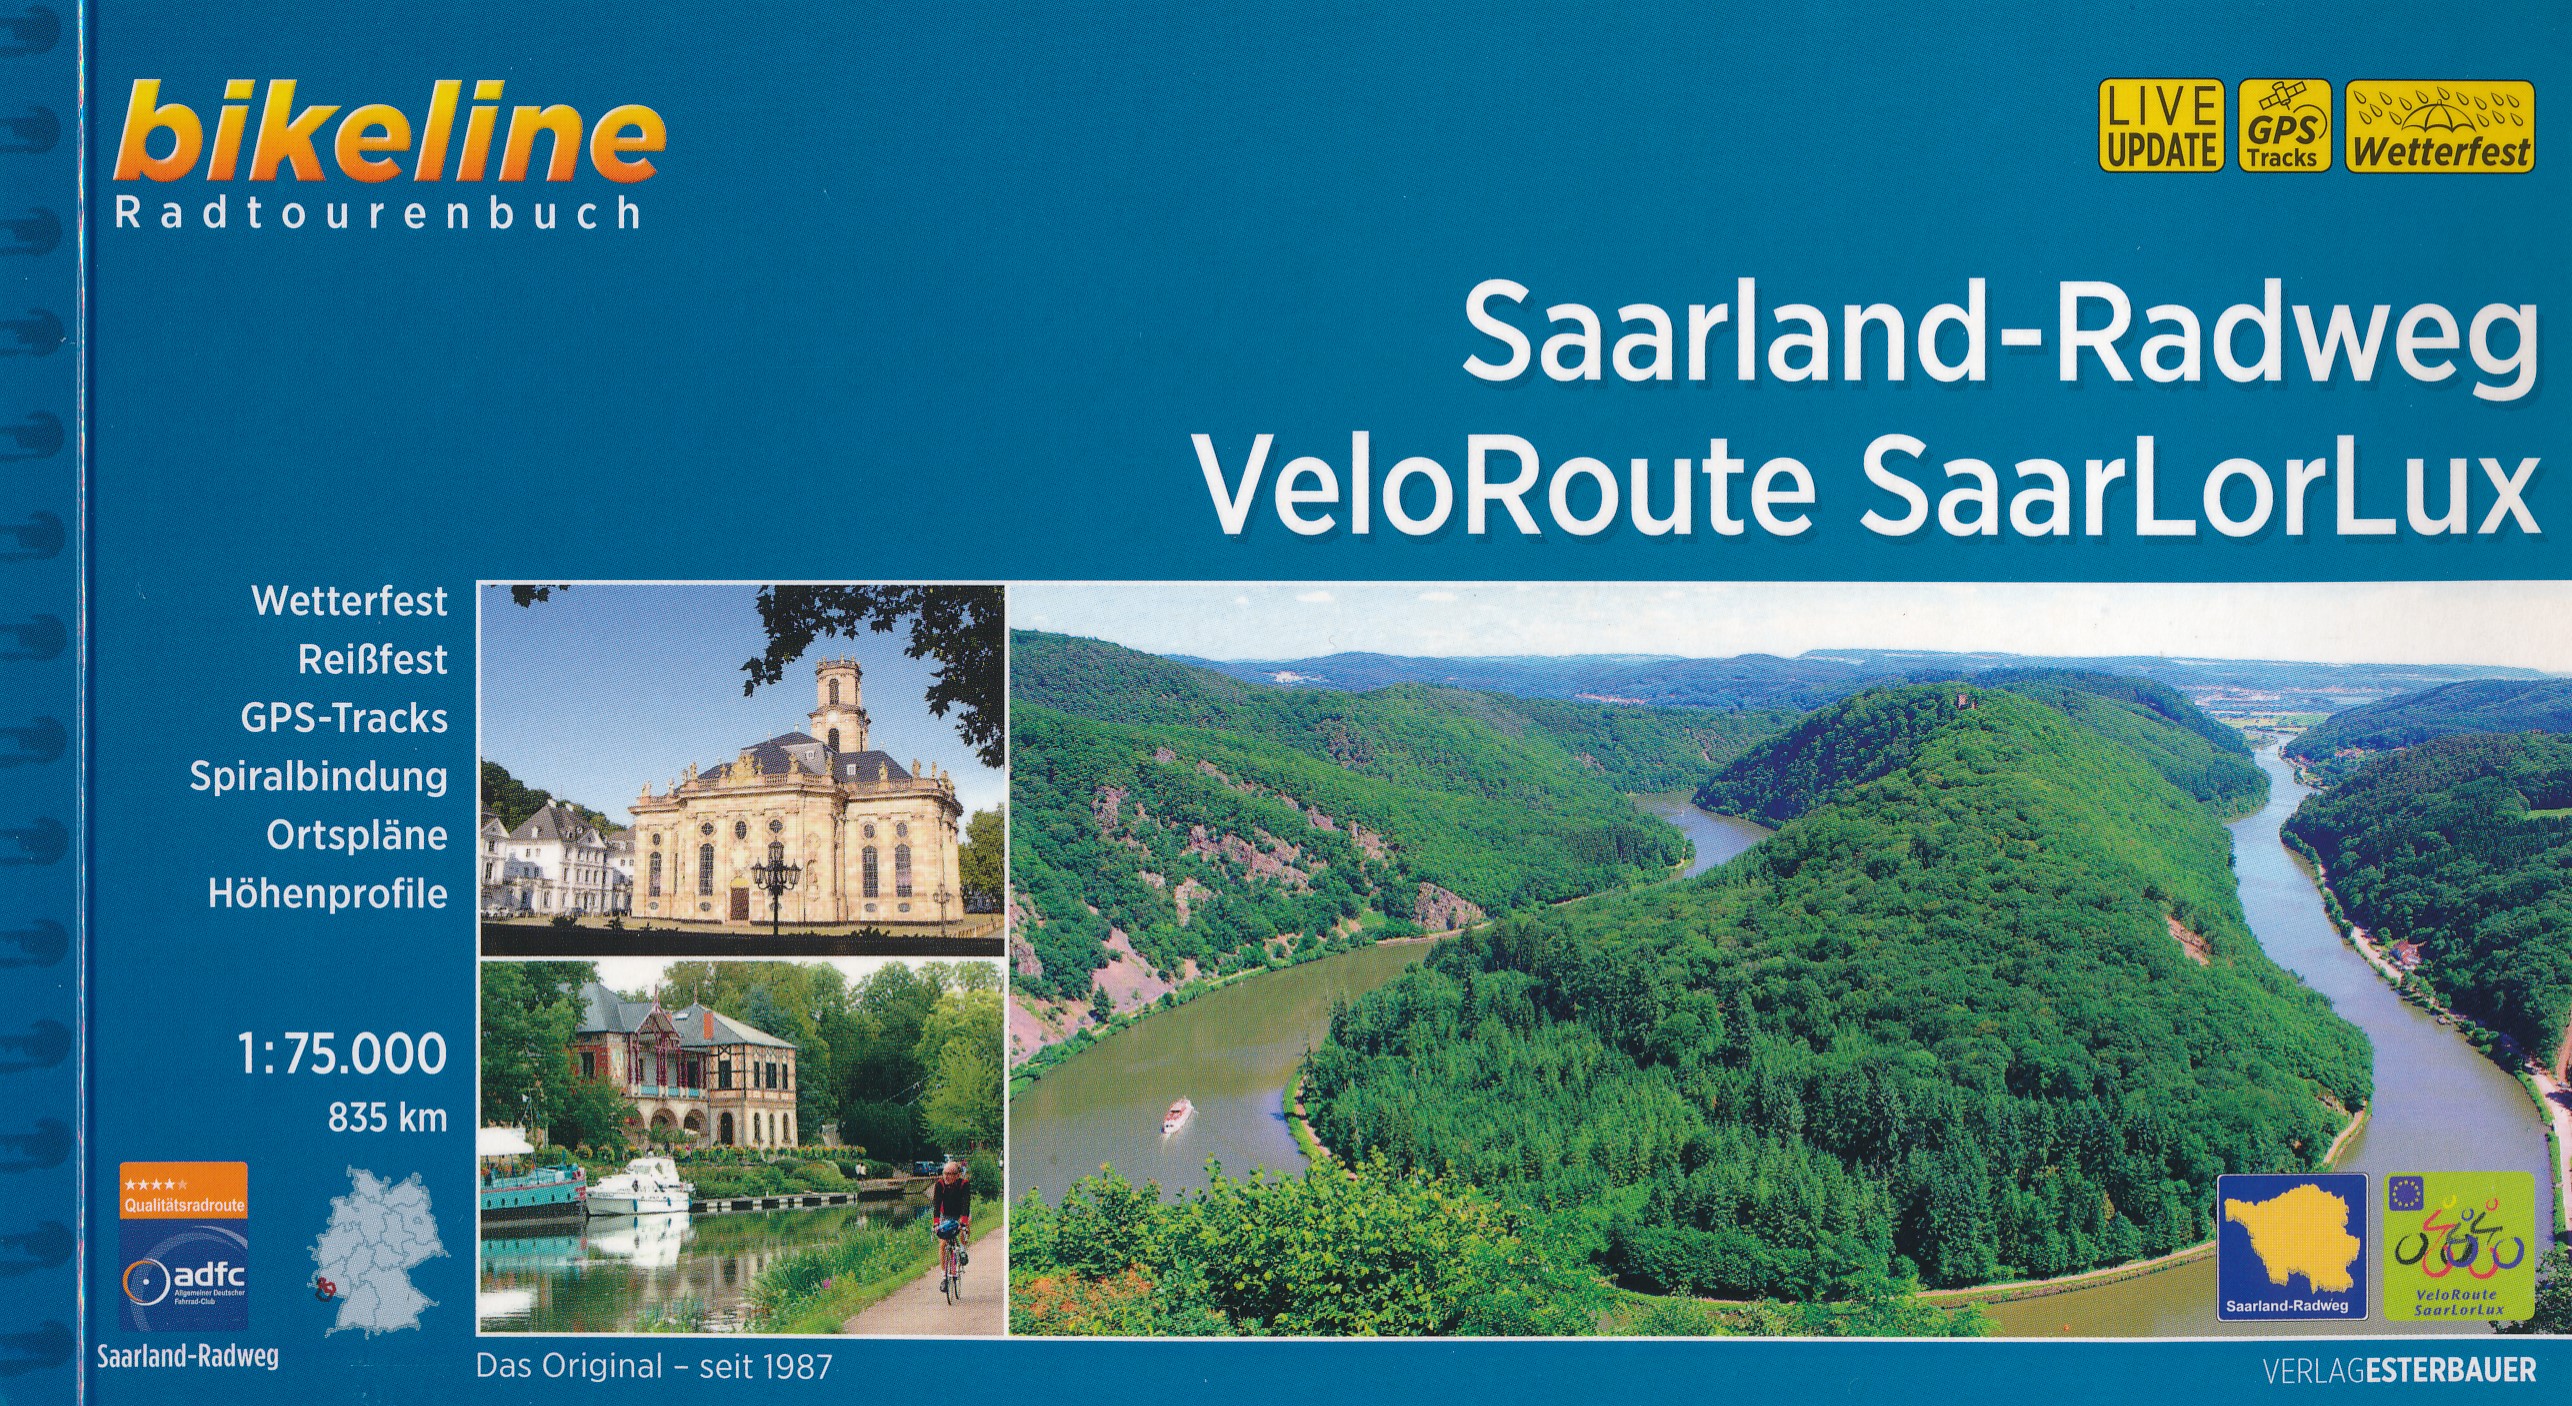 Online bestellen: Fietsgids Bikeline Saarland-Radweg, VeloRoute SaarLorLux | Esterbauer